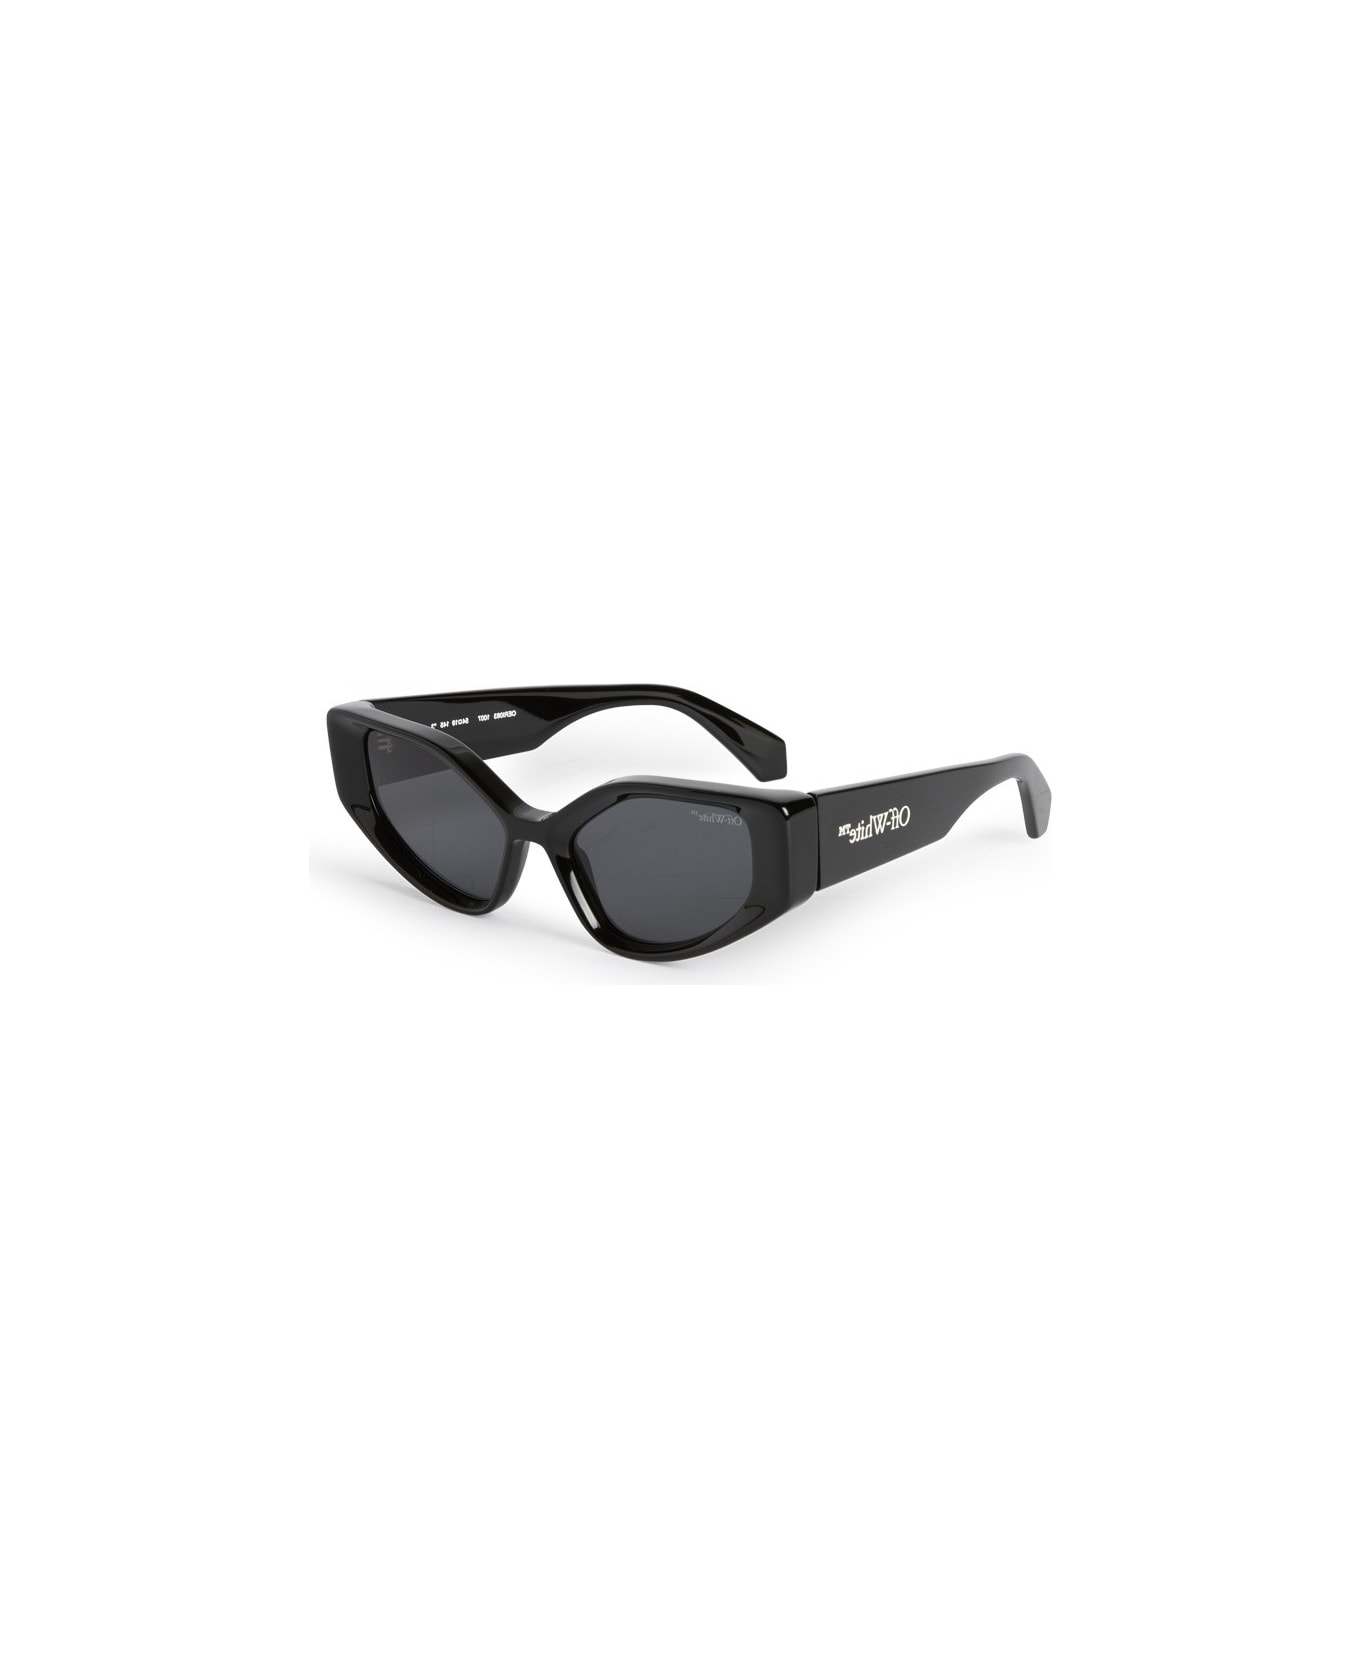 Off-White MEMPHIS SUNGLASSES Sunglasses - Black